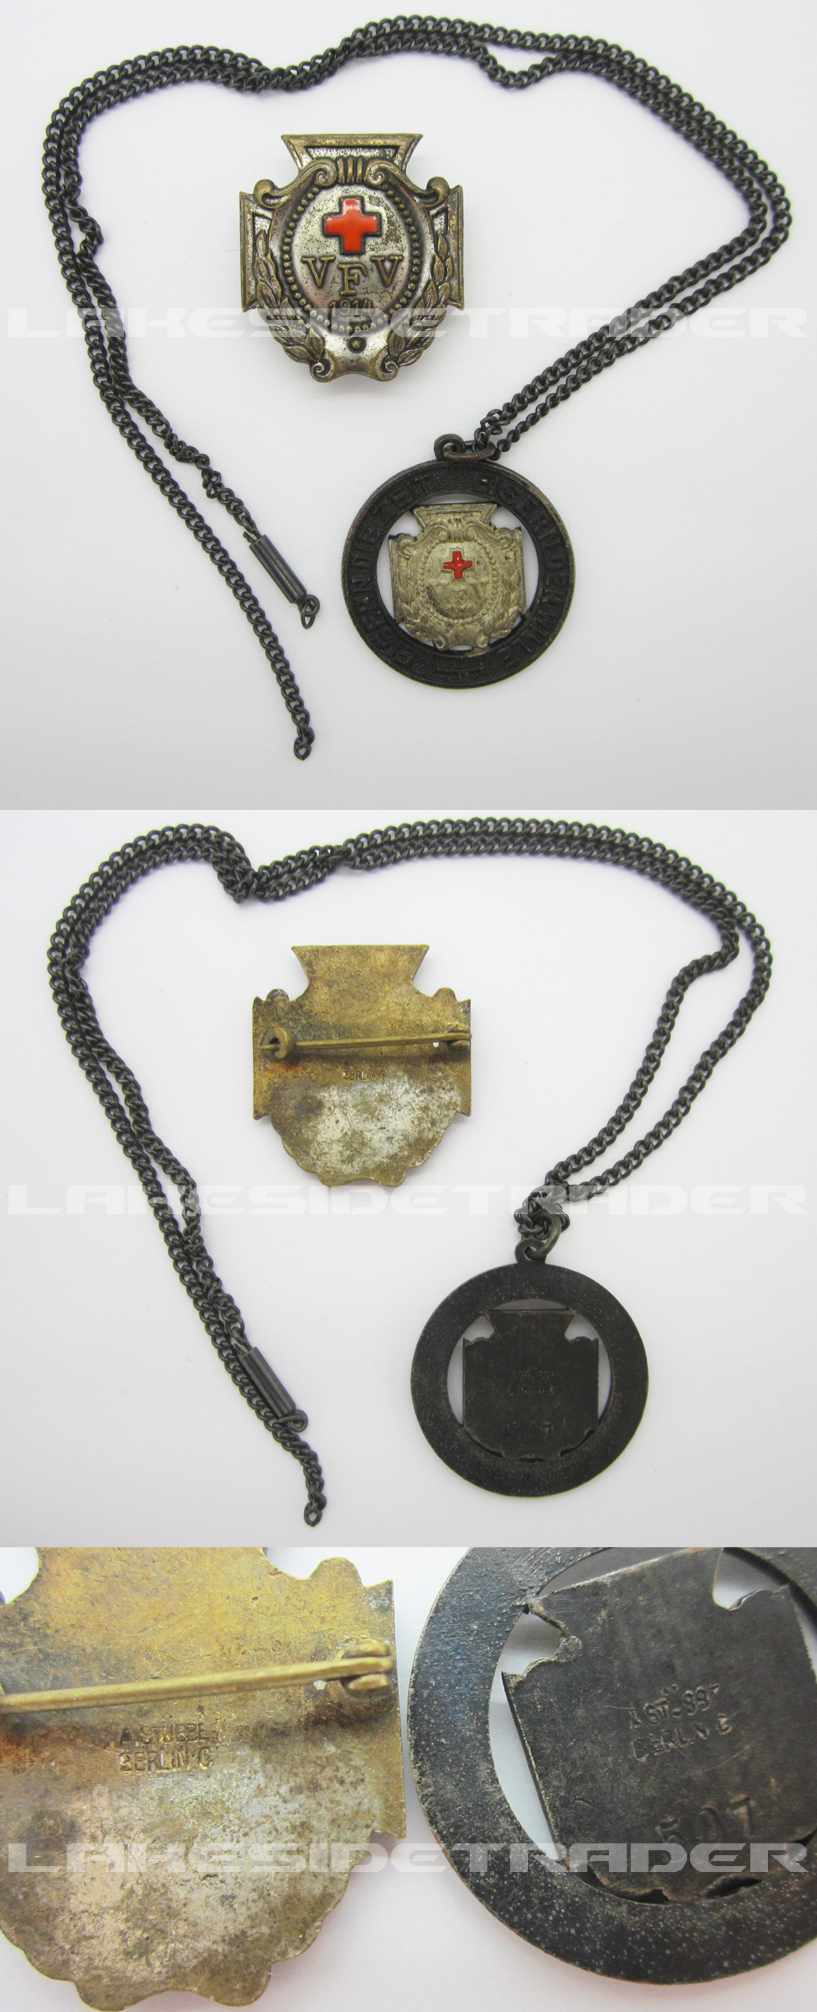 VFV Membership Badge and Service Badge (Necklace) 1914